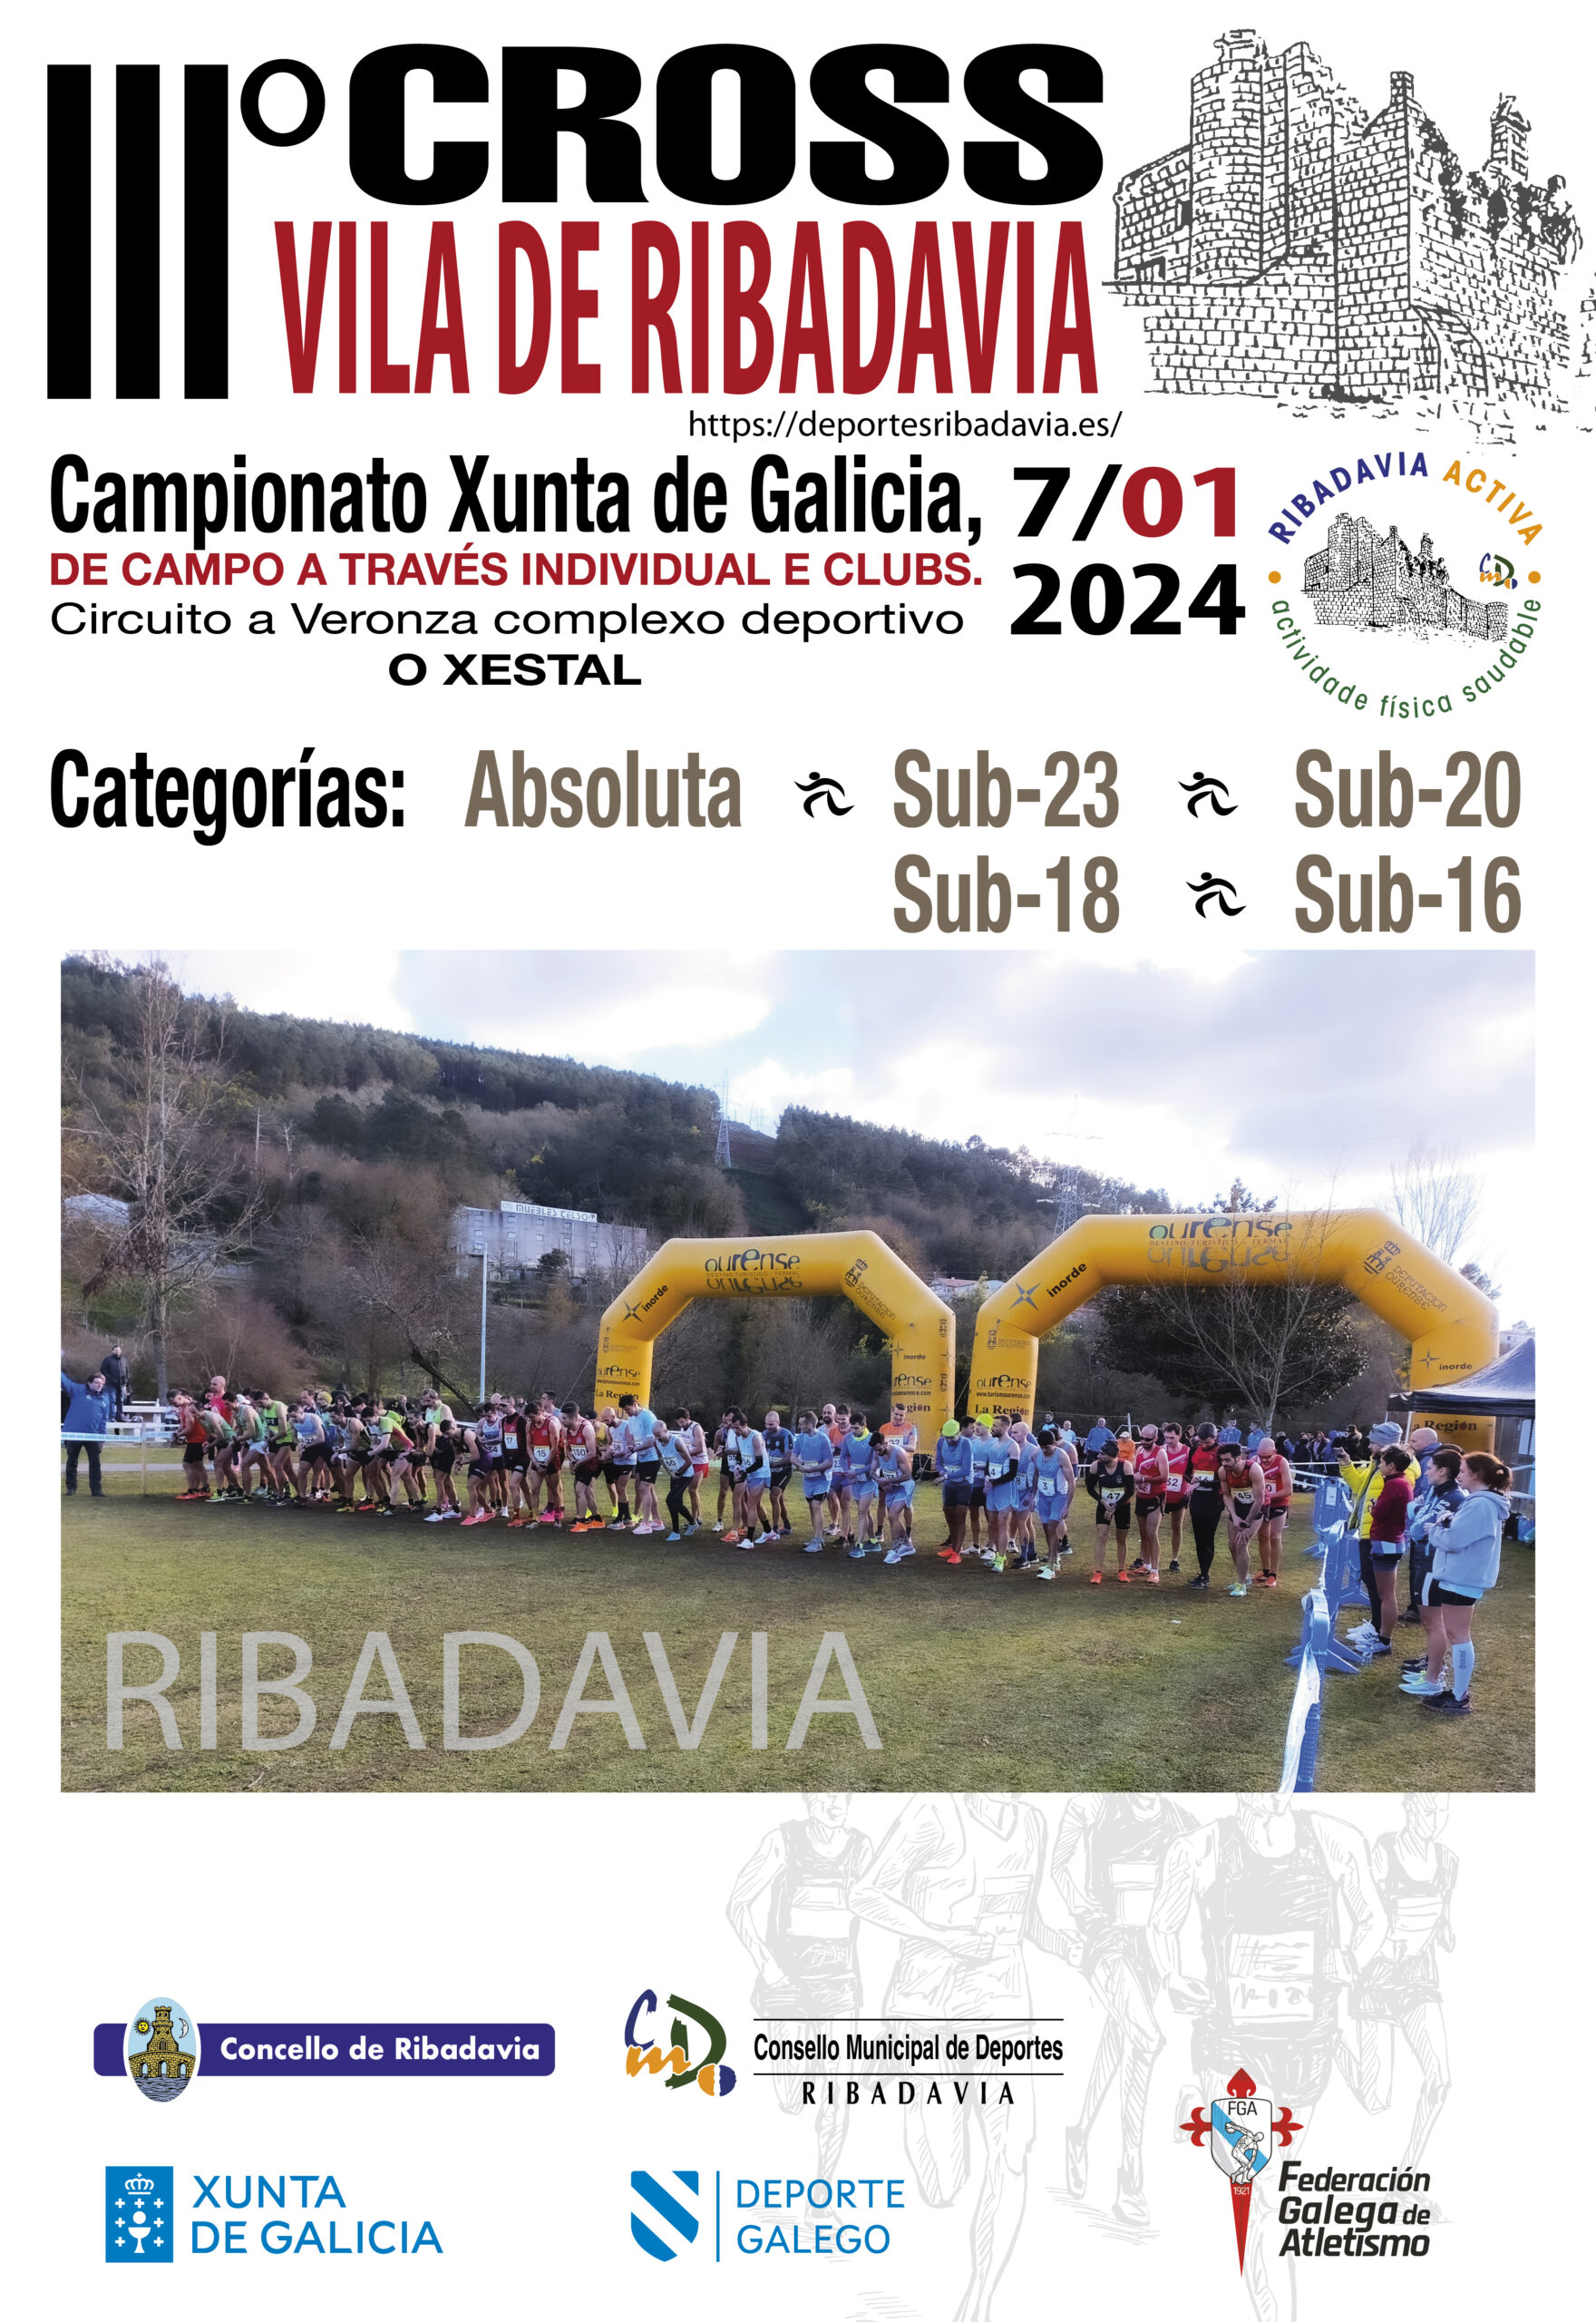 Campionato Xunta de Galicia Individual e de Clubs: Sub 16, Sub 18, Sub 20, Sub 23 e Absoluto de Campo a Través